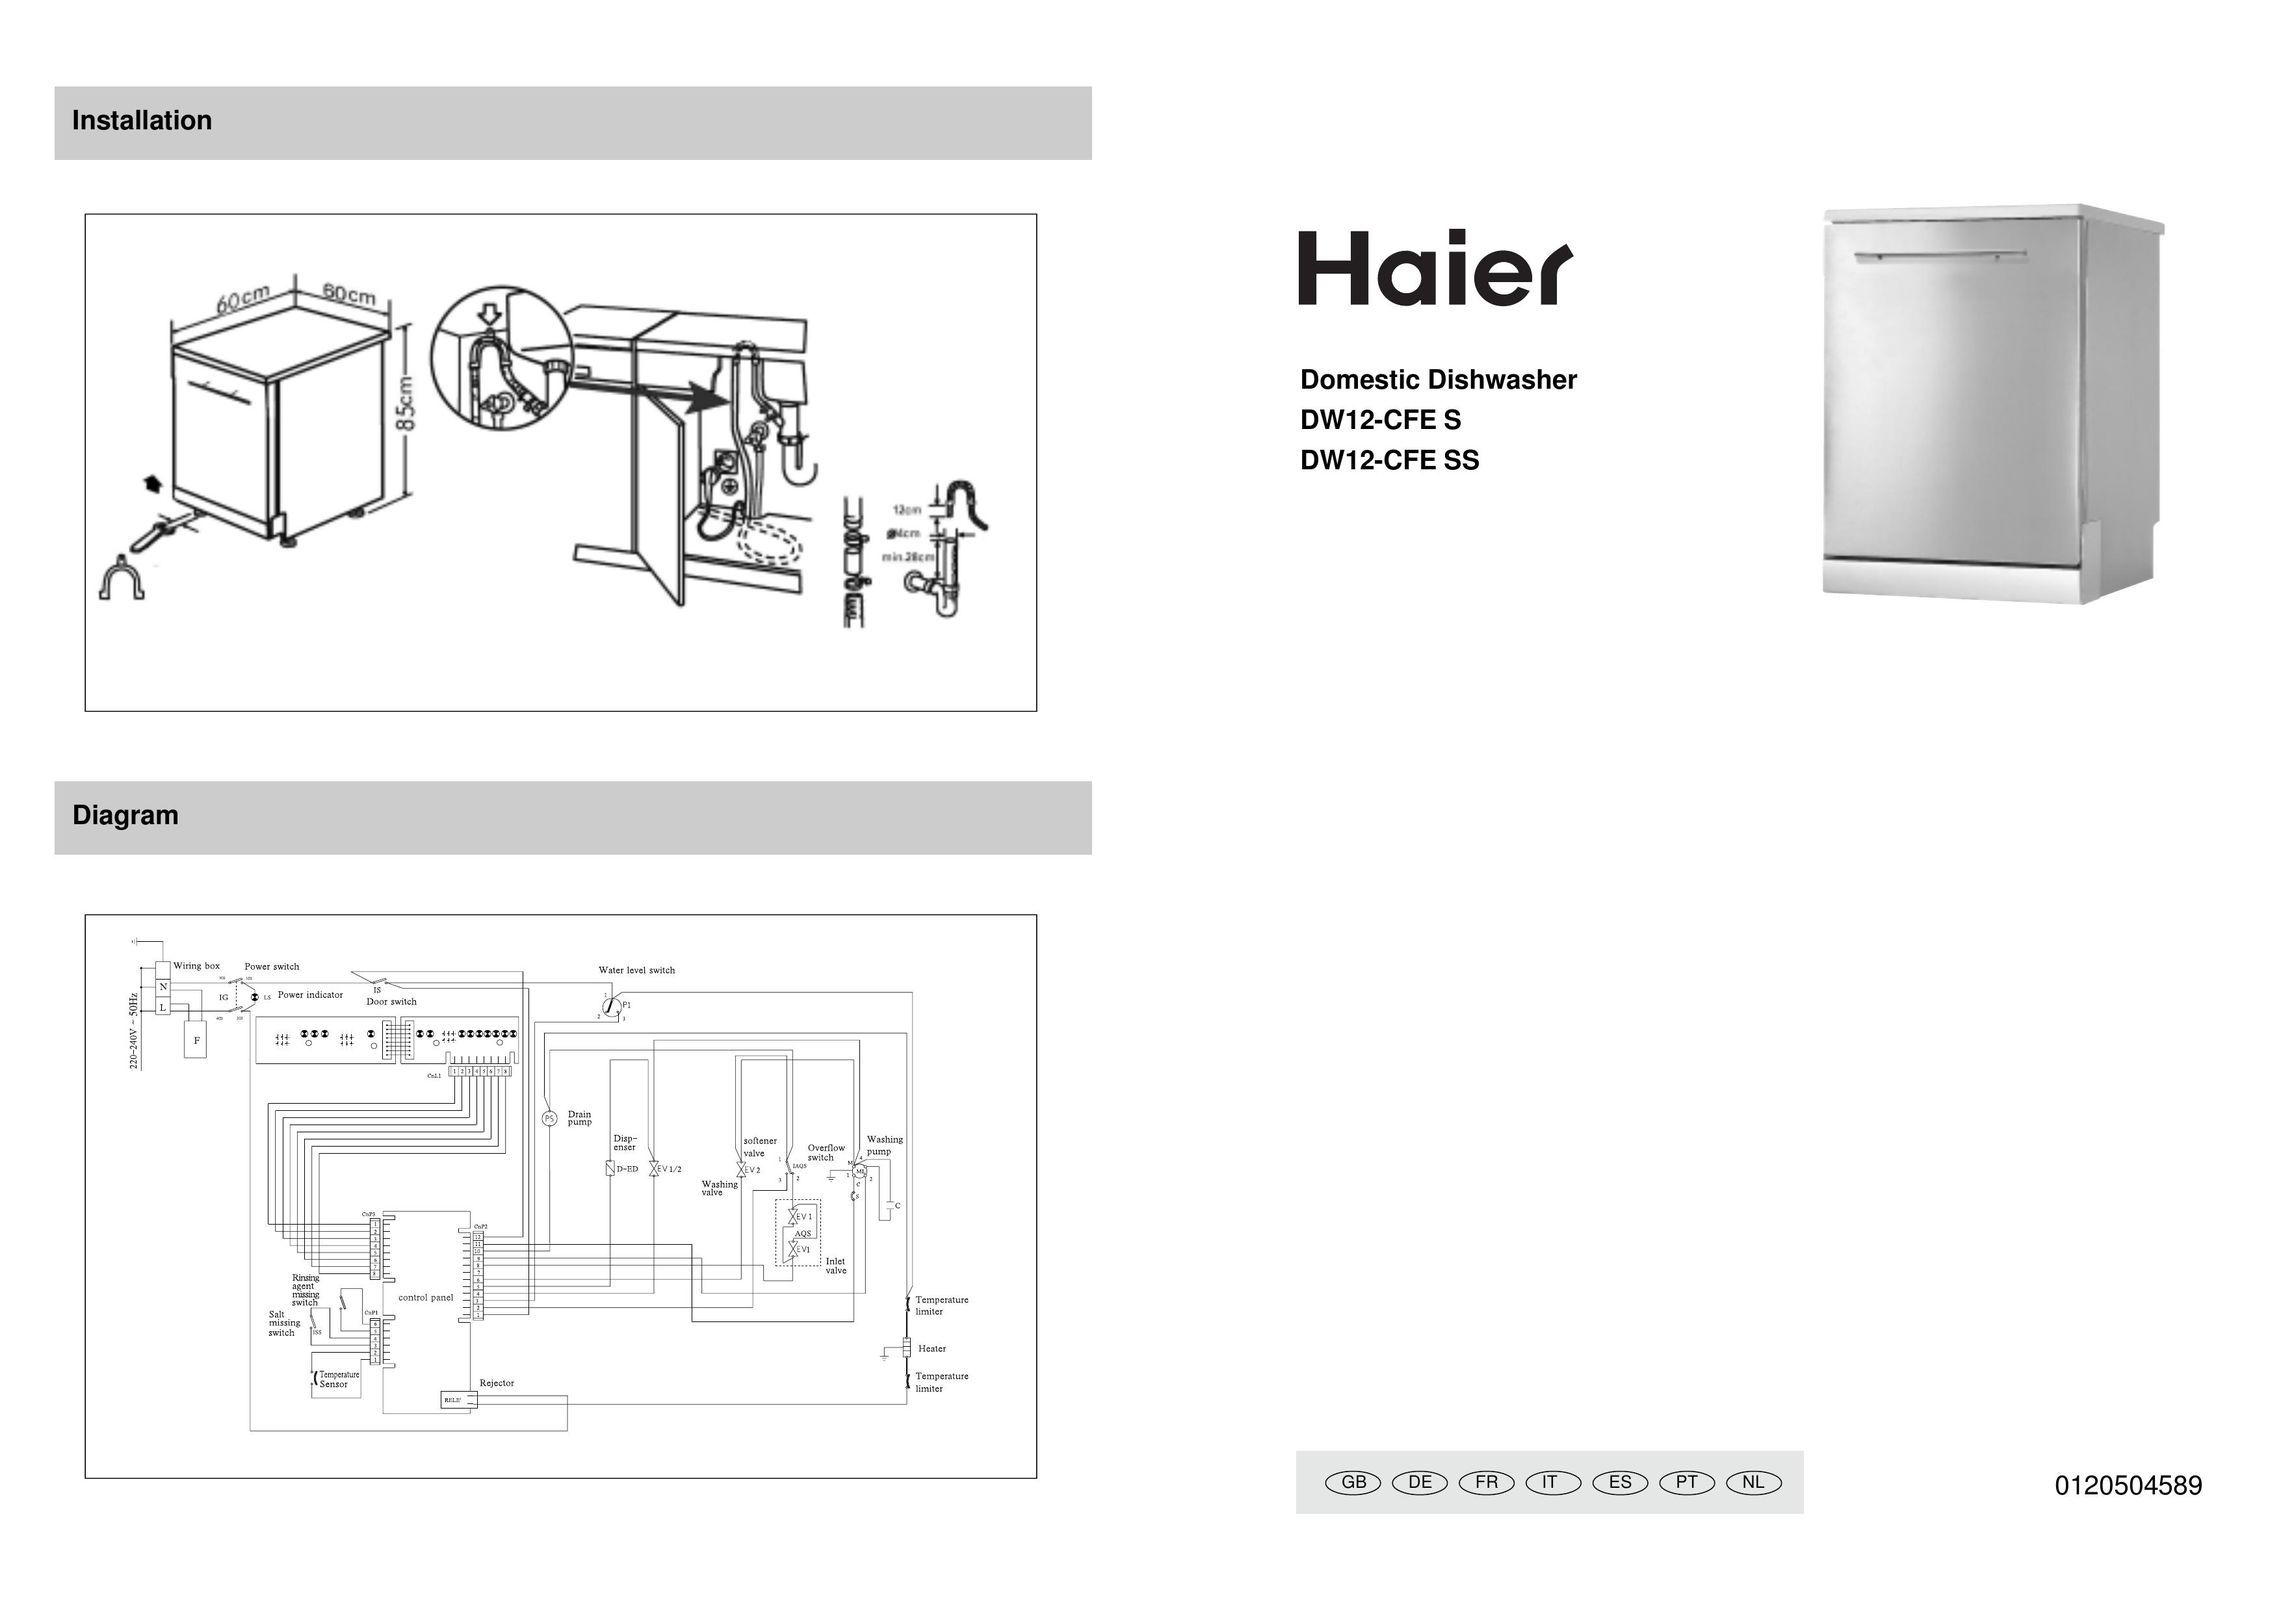 Haier DW12-CFE S Dishwasher User Manual